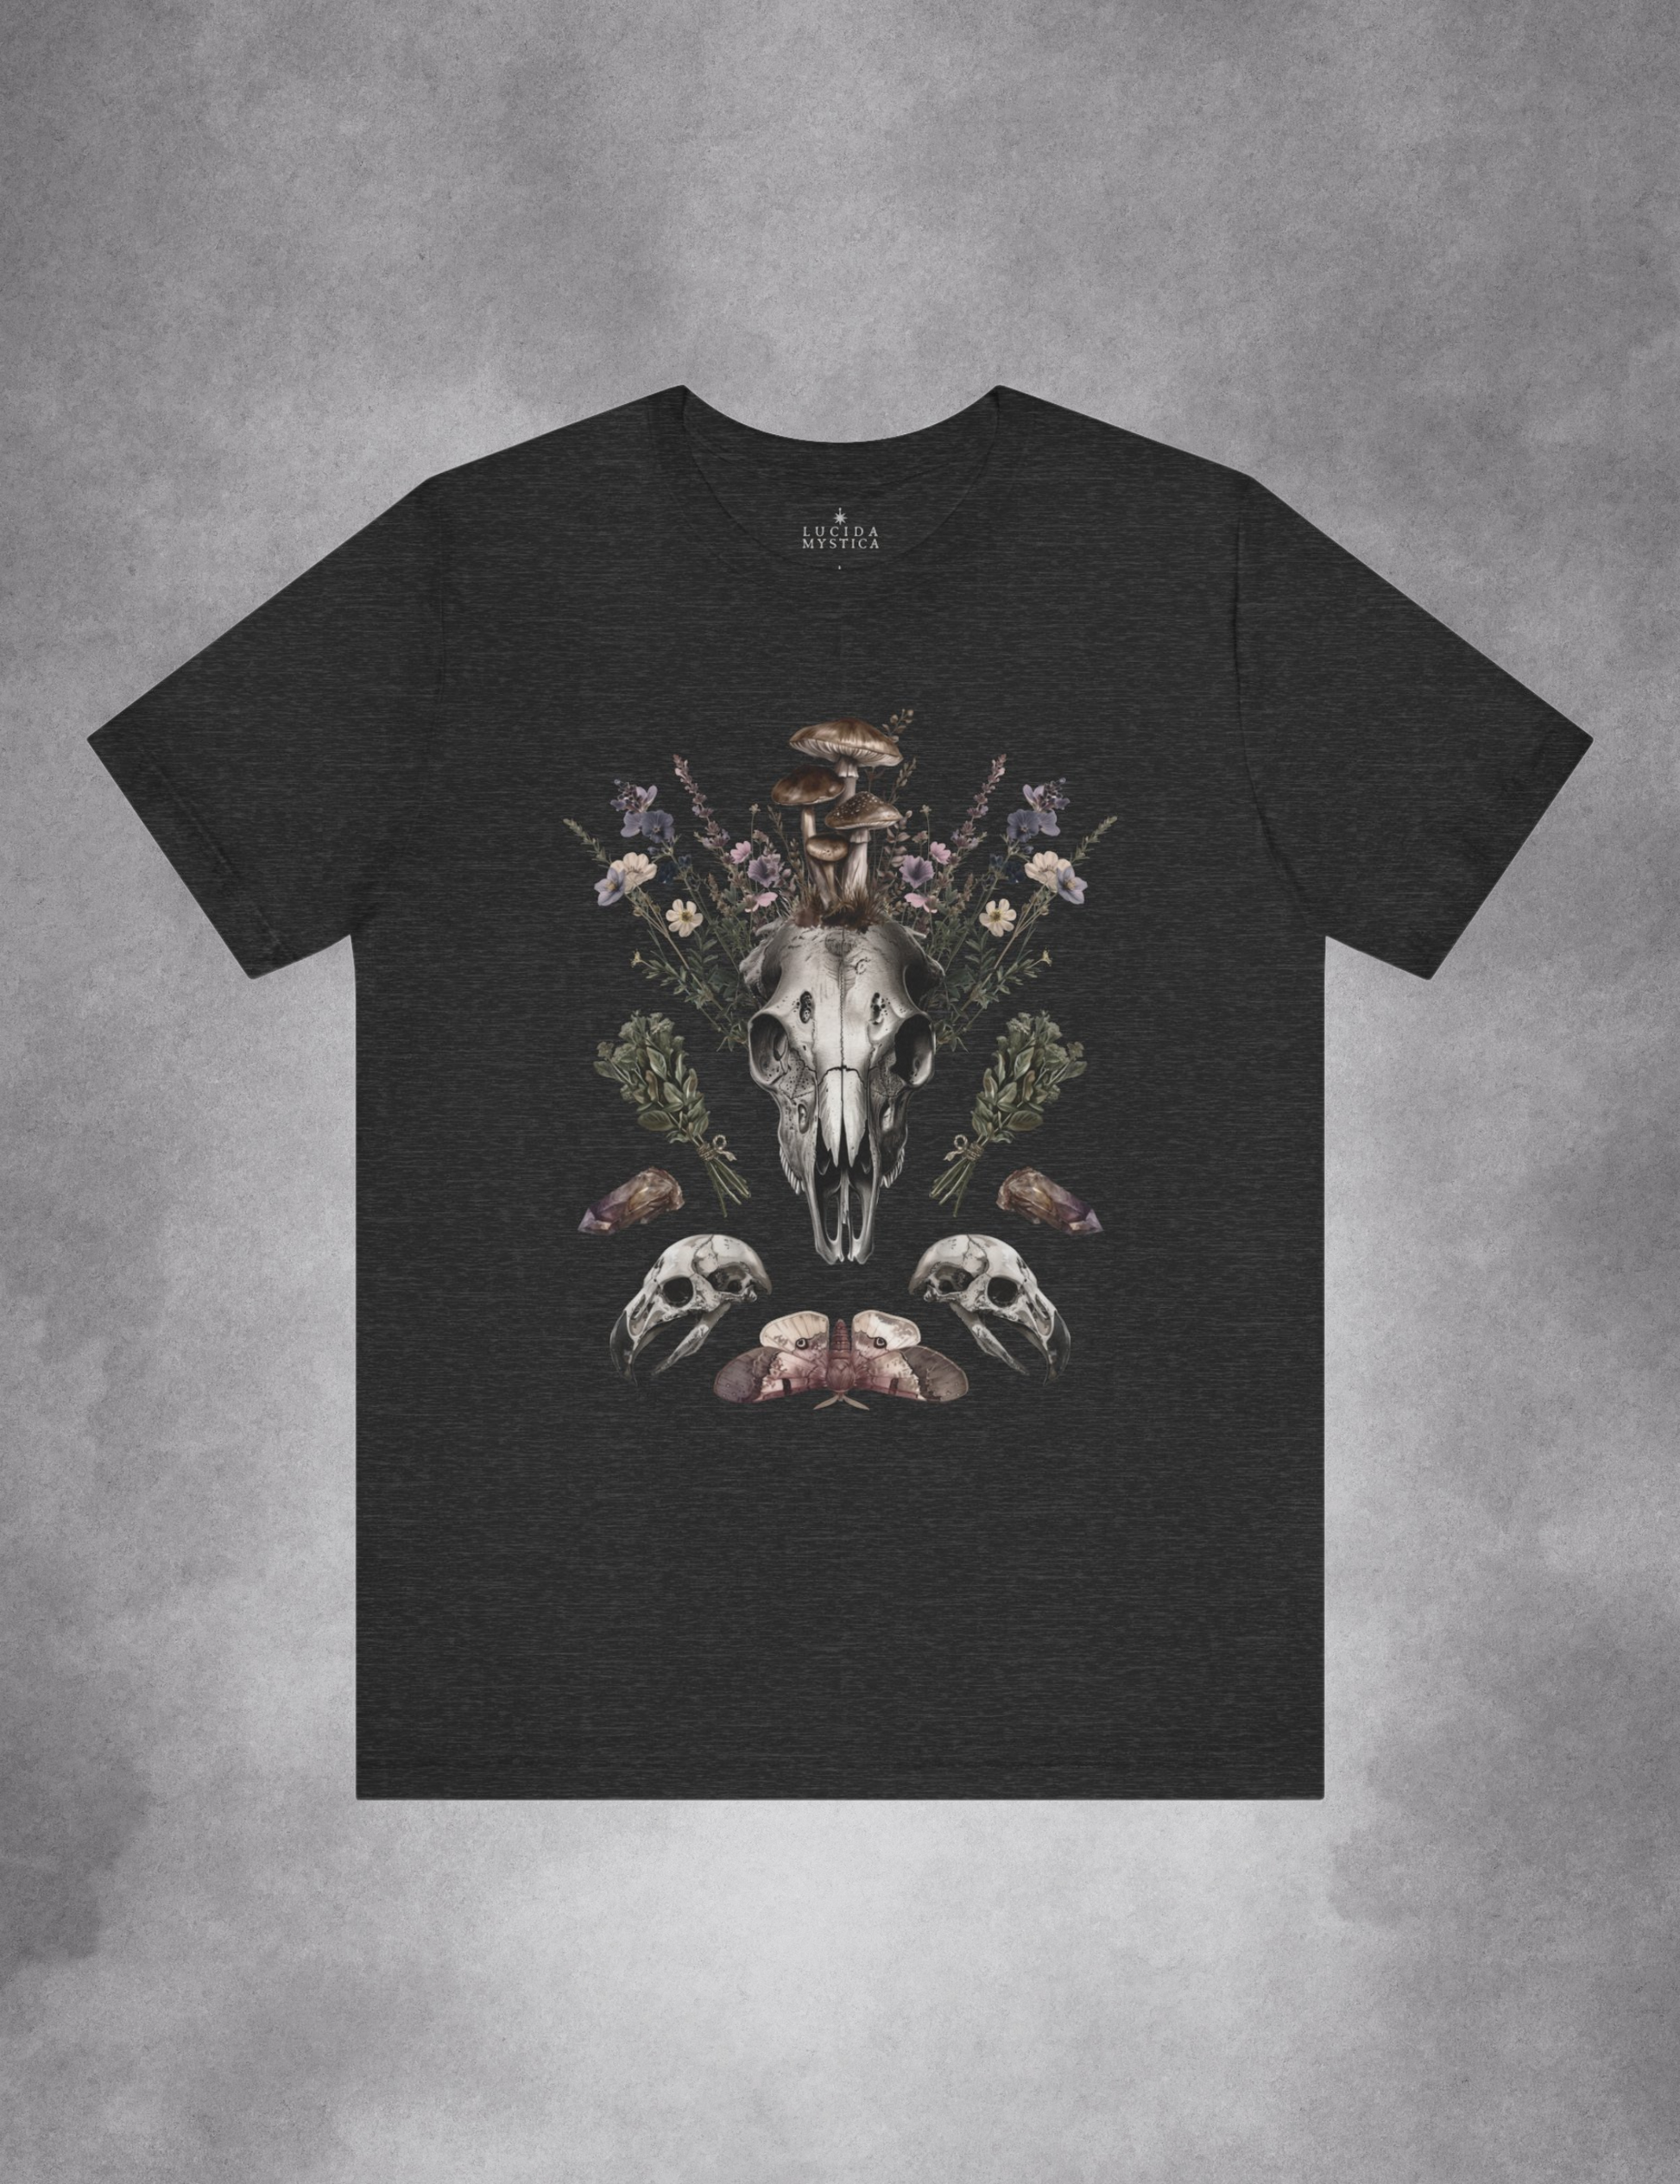 Dark Cottagecore Aesthetic Fairycore Grunge Clothing Skull Wildflowers Green Witch Plus Size Shirt